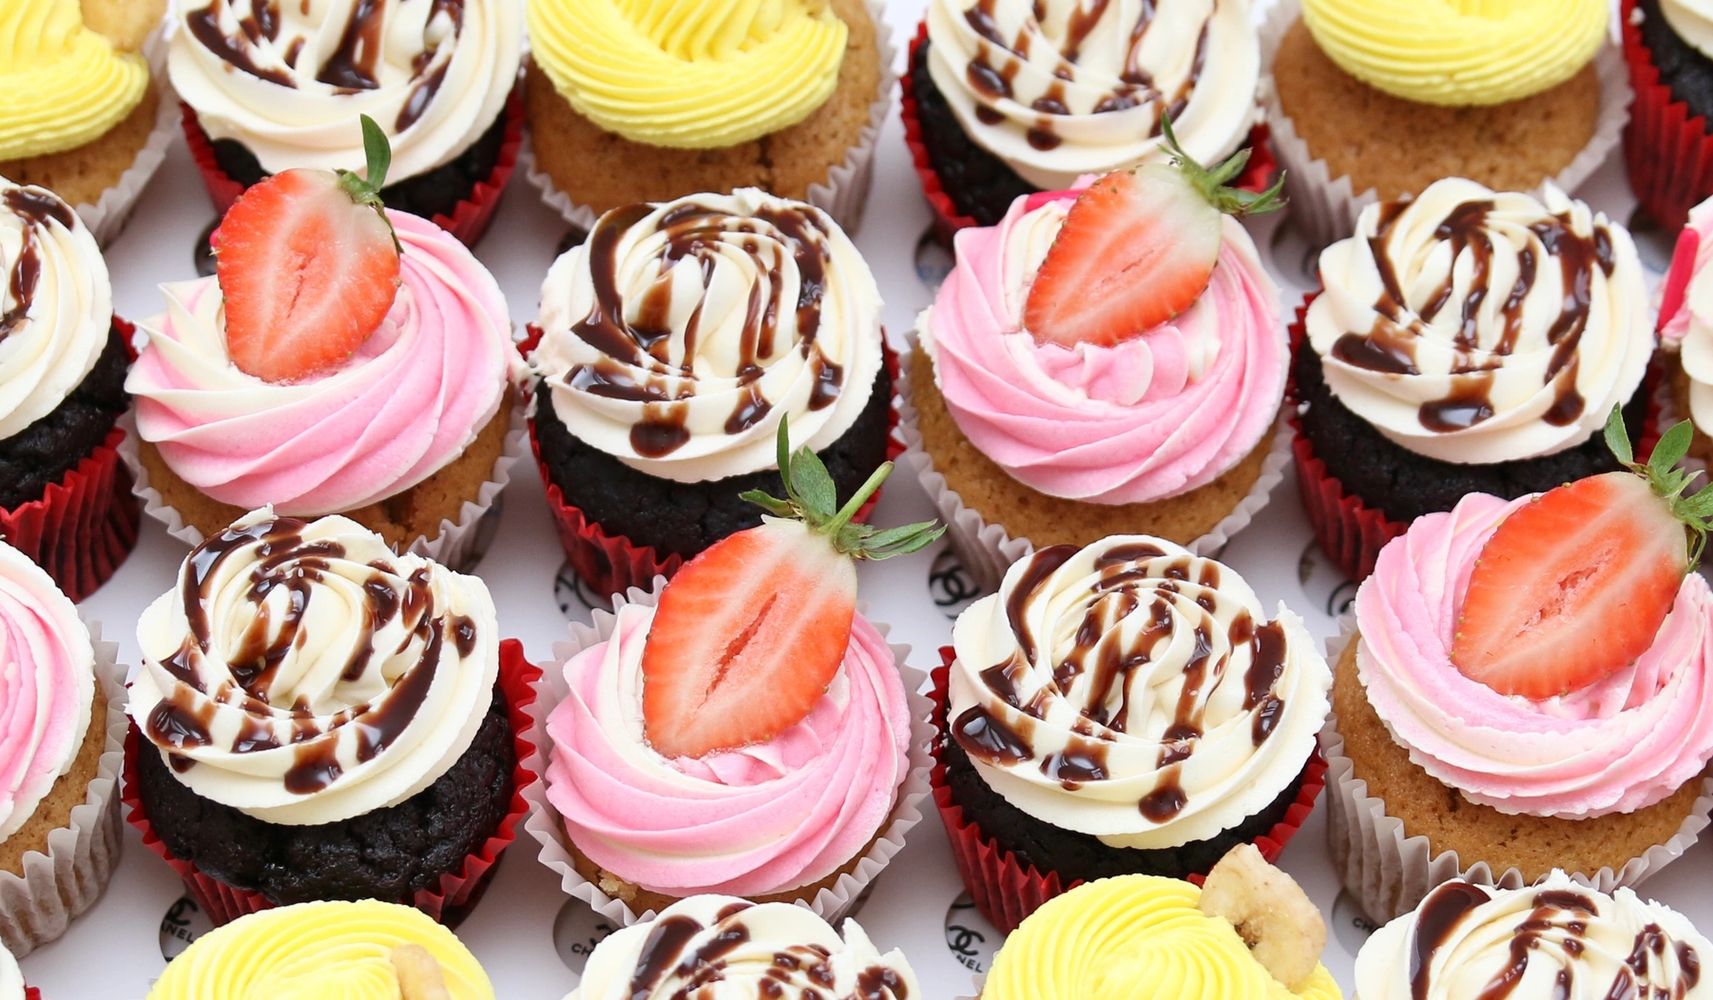 Assorted box of 24 vegan cupcakes 
London vegan glamorous baker 👩🏽‍🍳 